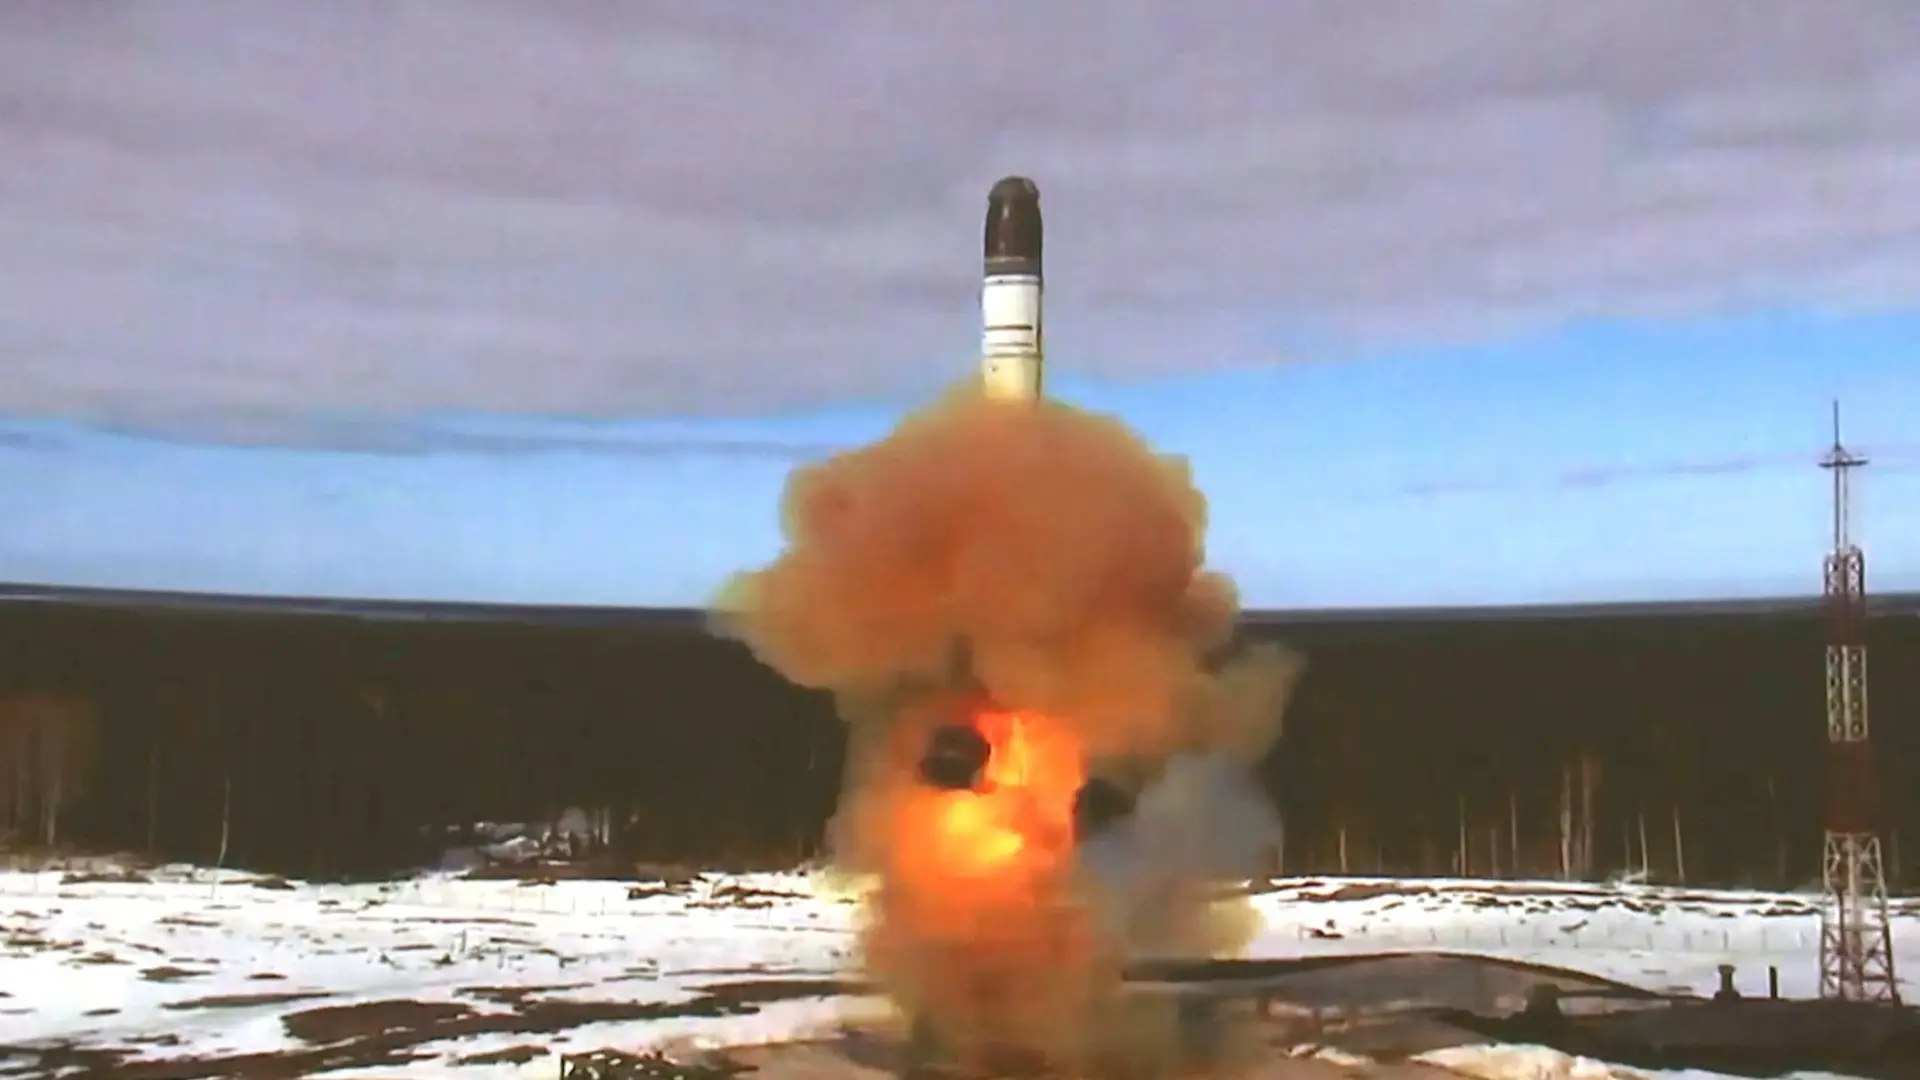 Guerra na Ucrânia: Rússia testa novo míssil intercontinental com capacidade nuclear